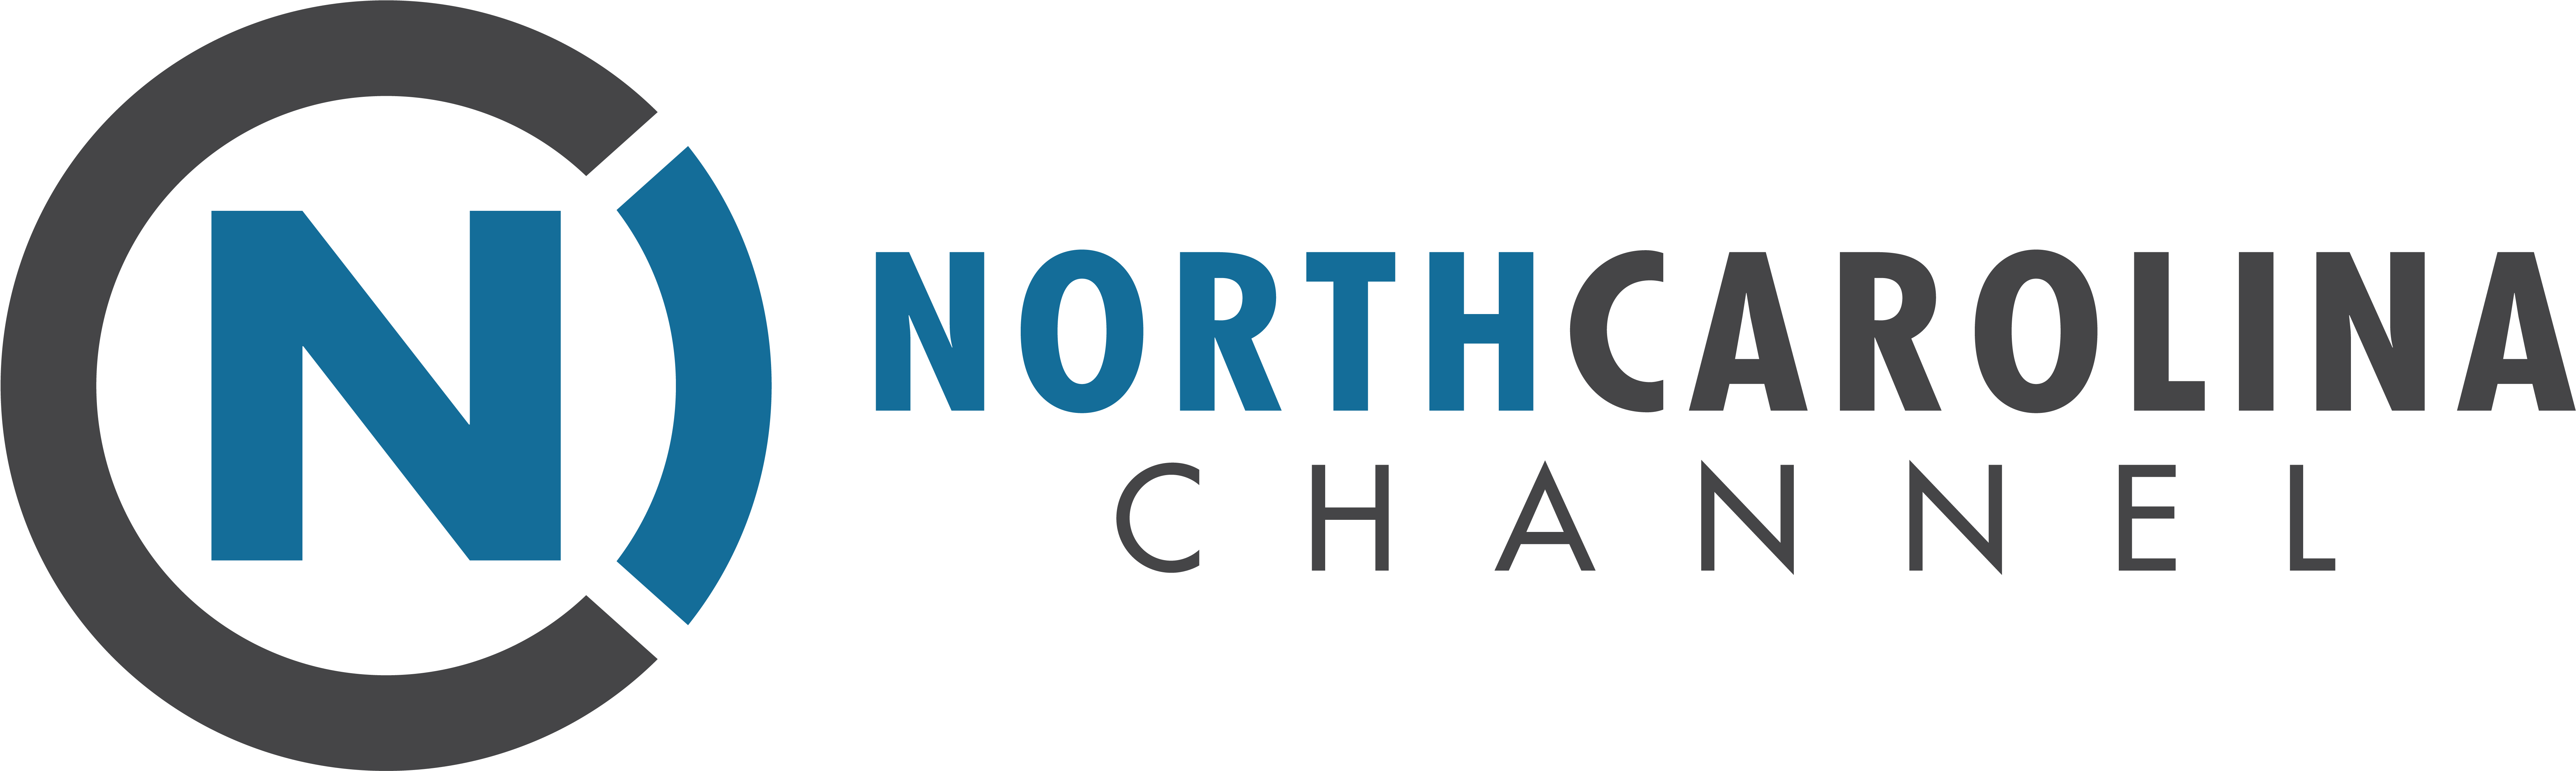 Nc Channel - North Carolina Channel (8000x2586)